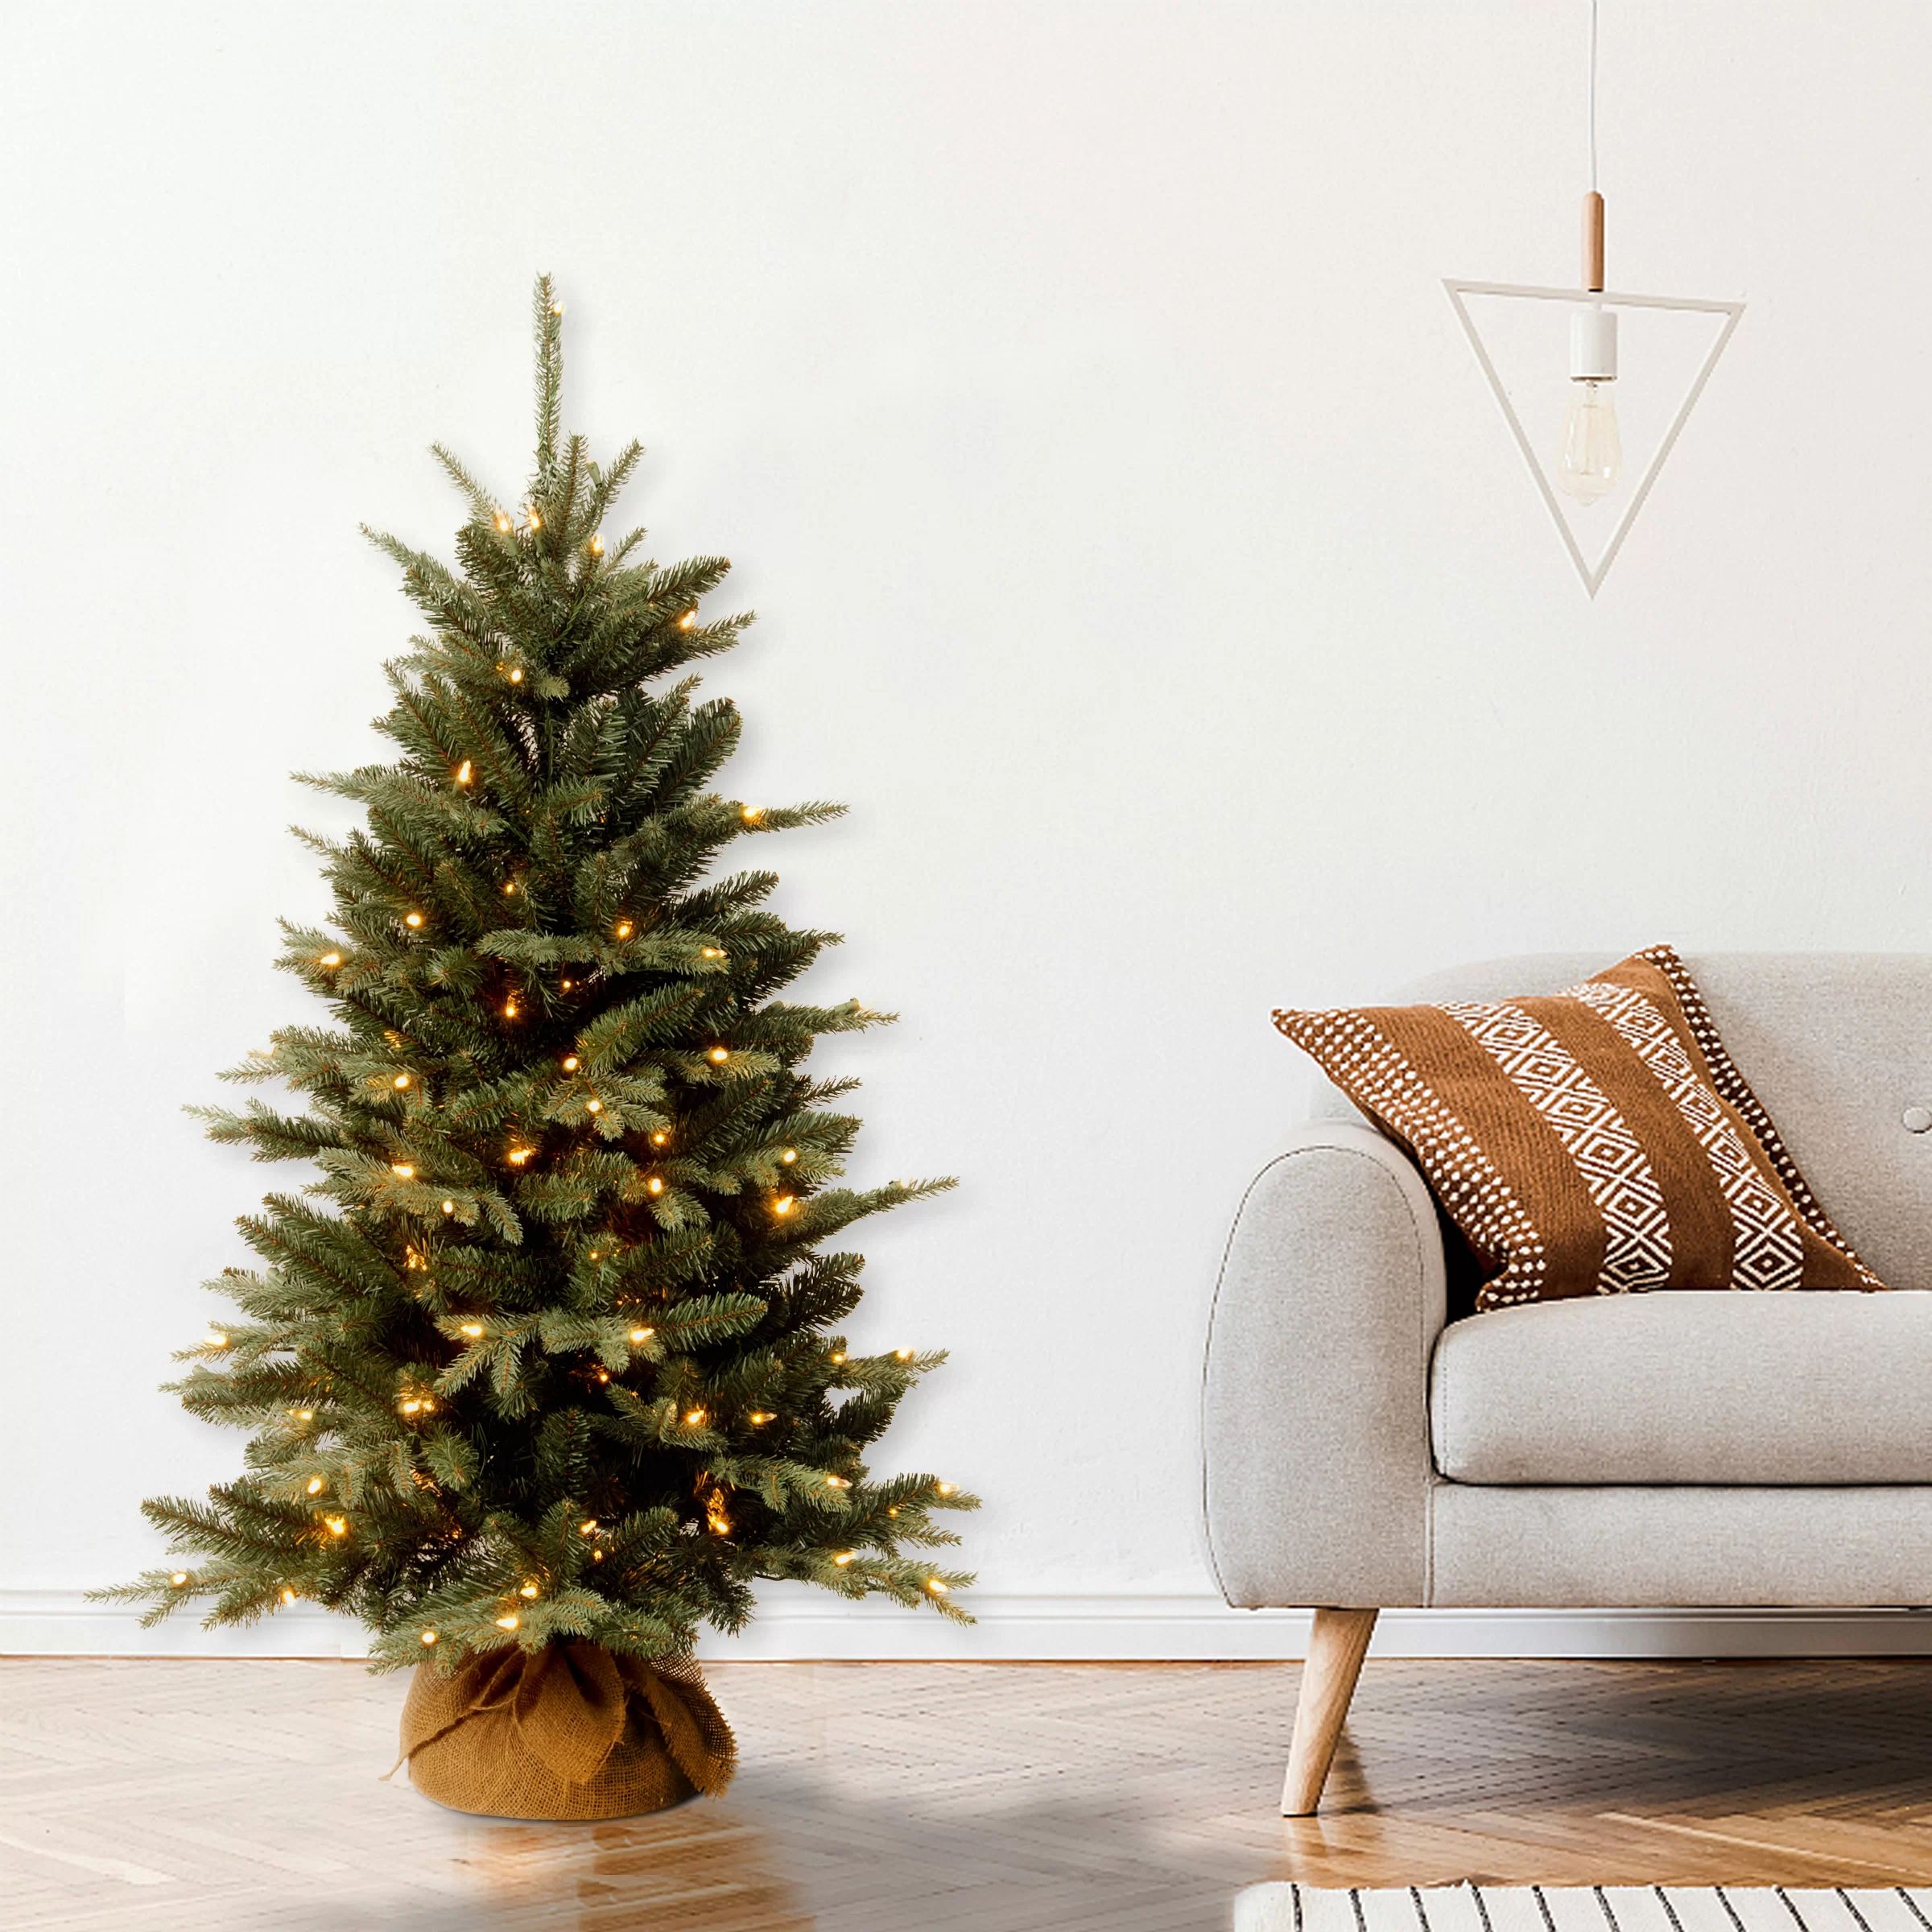 4' Lighted Artificial Pine Christmas Tree | Wayfair North America